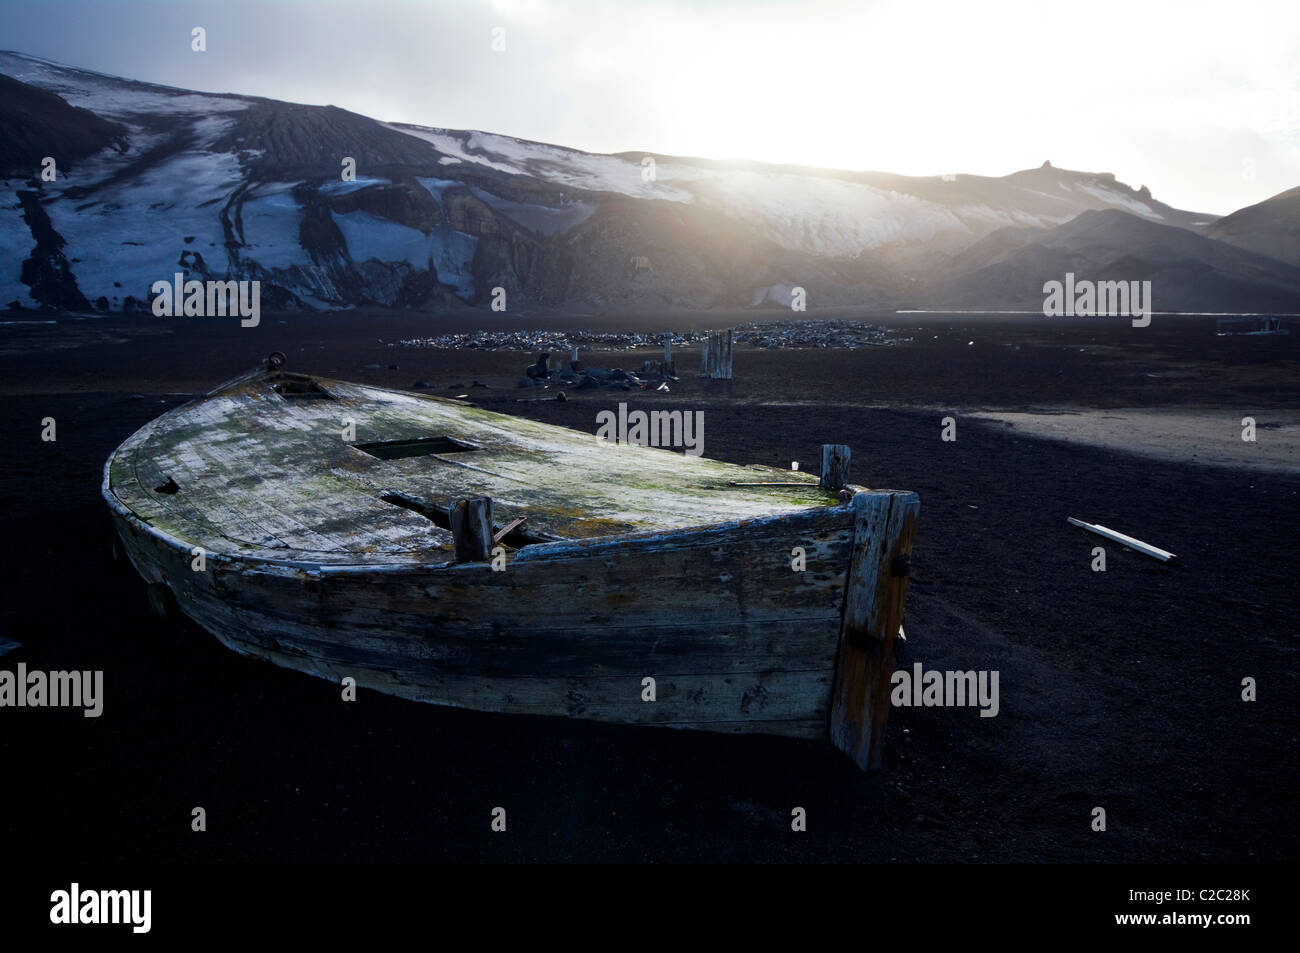 Antikes Holz whaling Schiff Ruinen in schwarzem Vulkansand gestrandet. Stockfoto